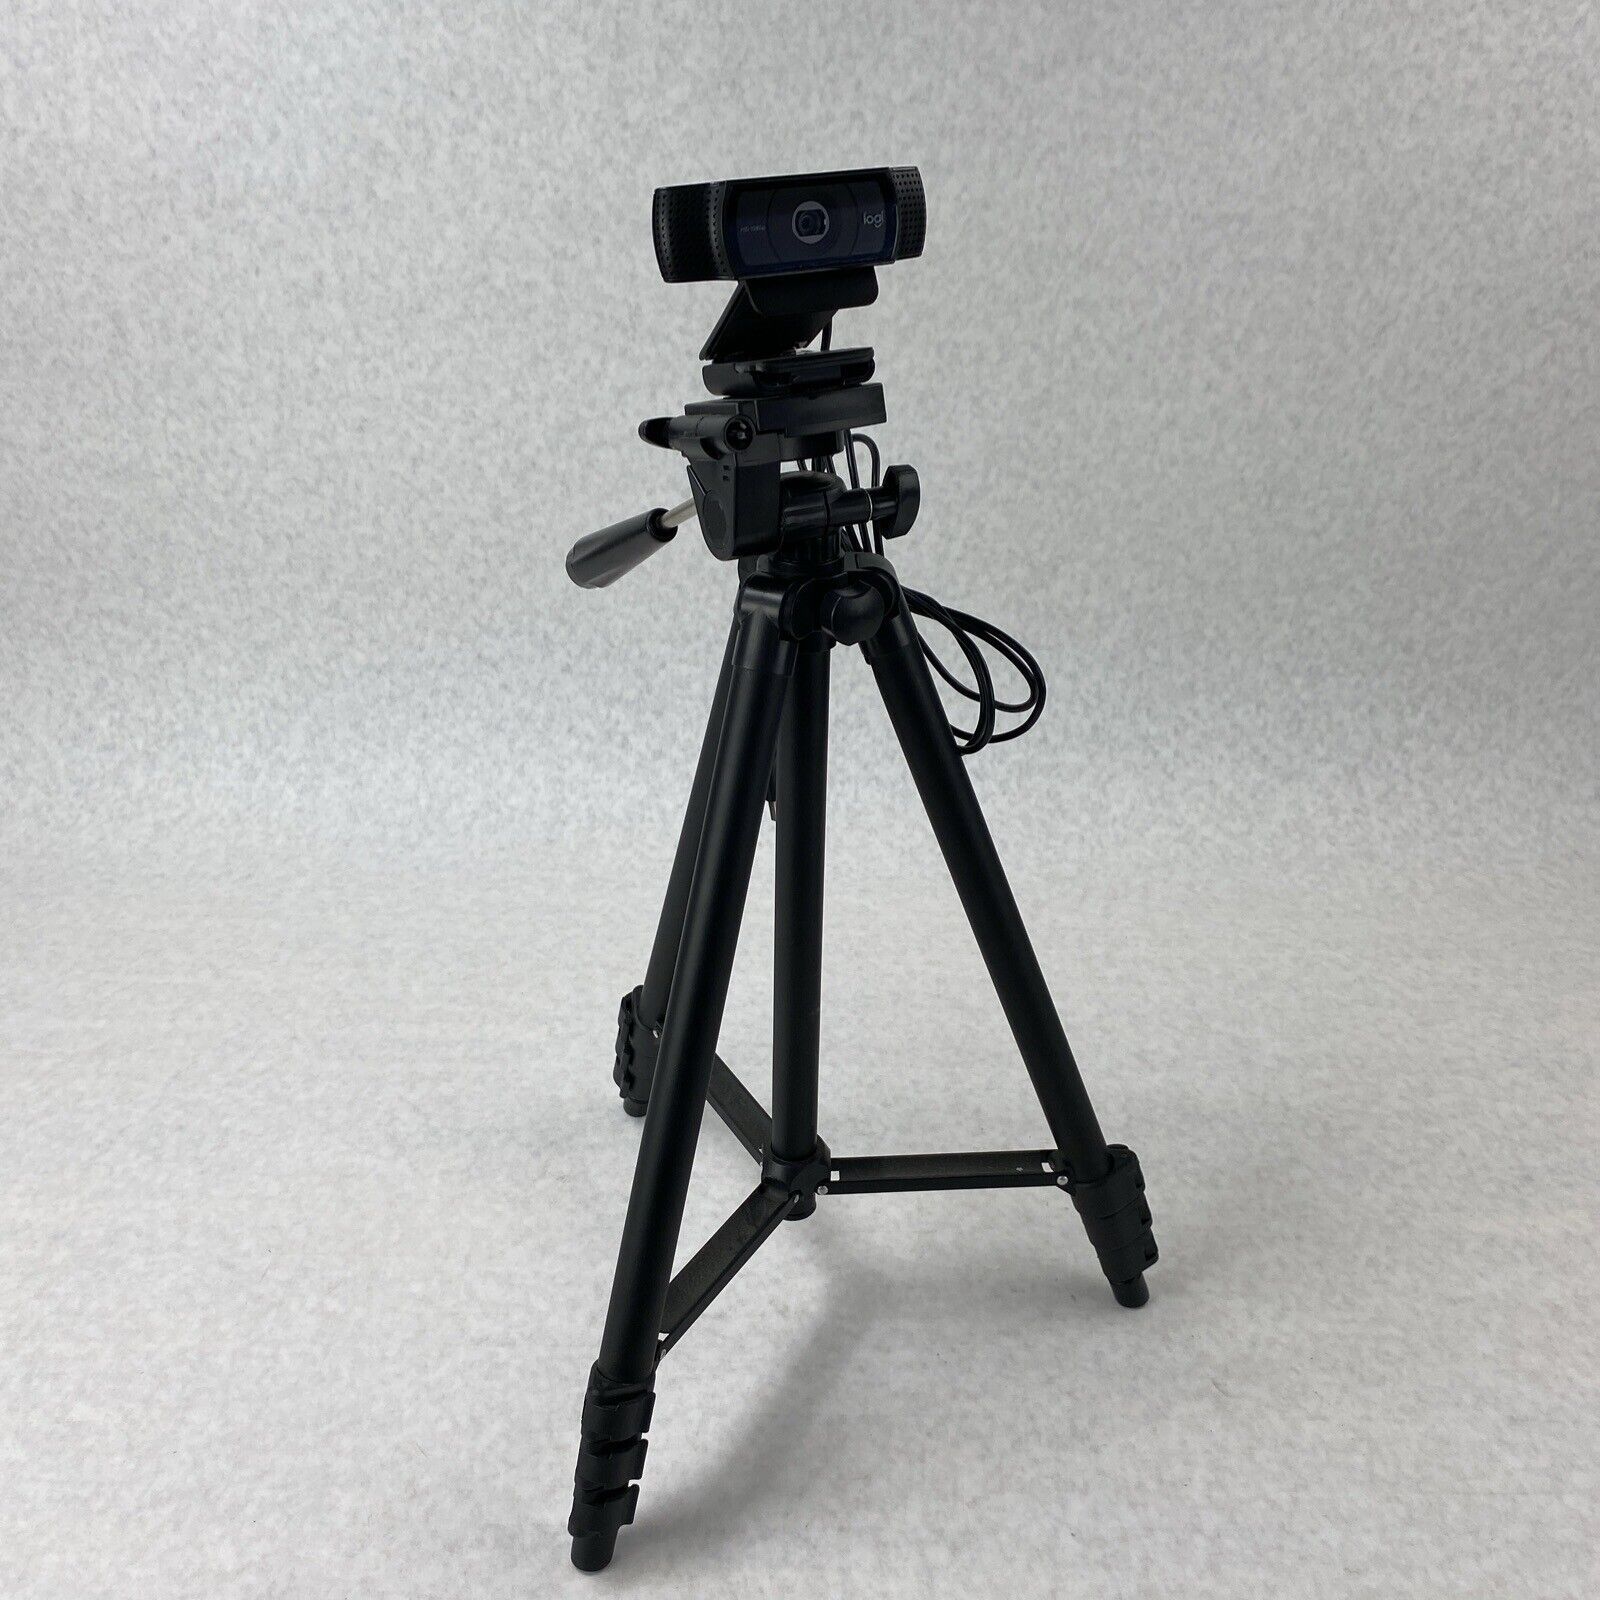 Logitech C920 HD 1080p USB Wired Pro Webcam 860-000560 w/Adjustable Tripod Stand